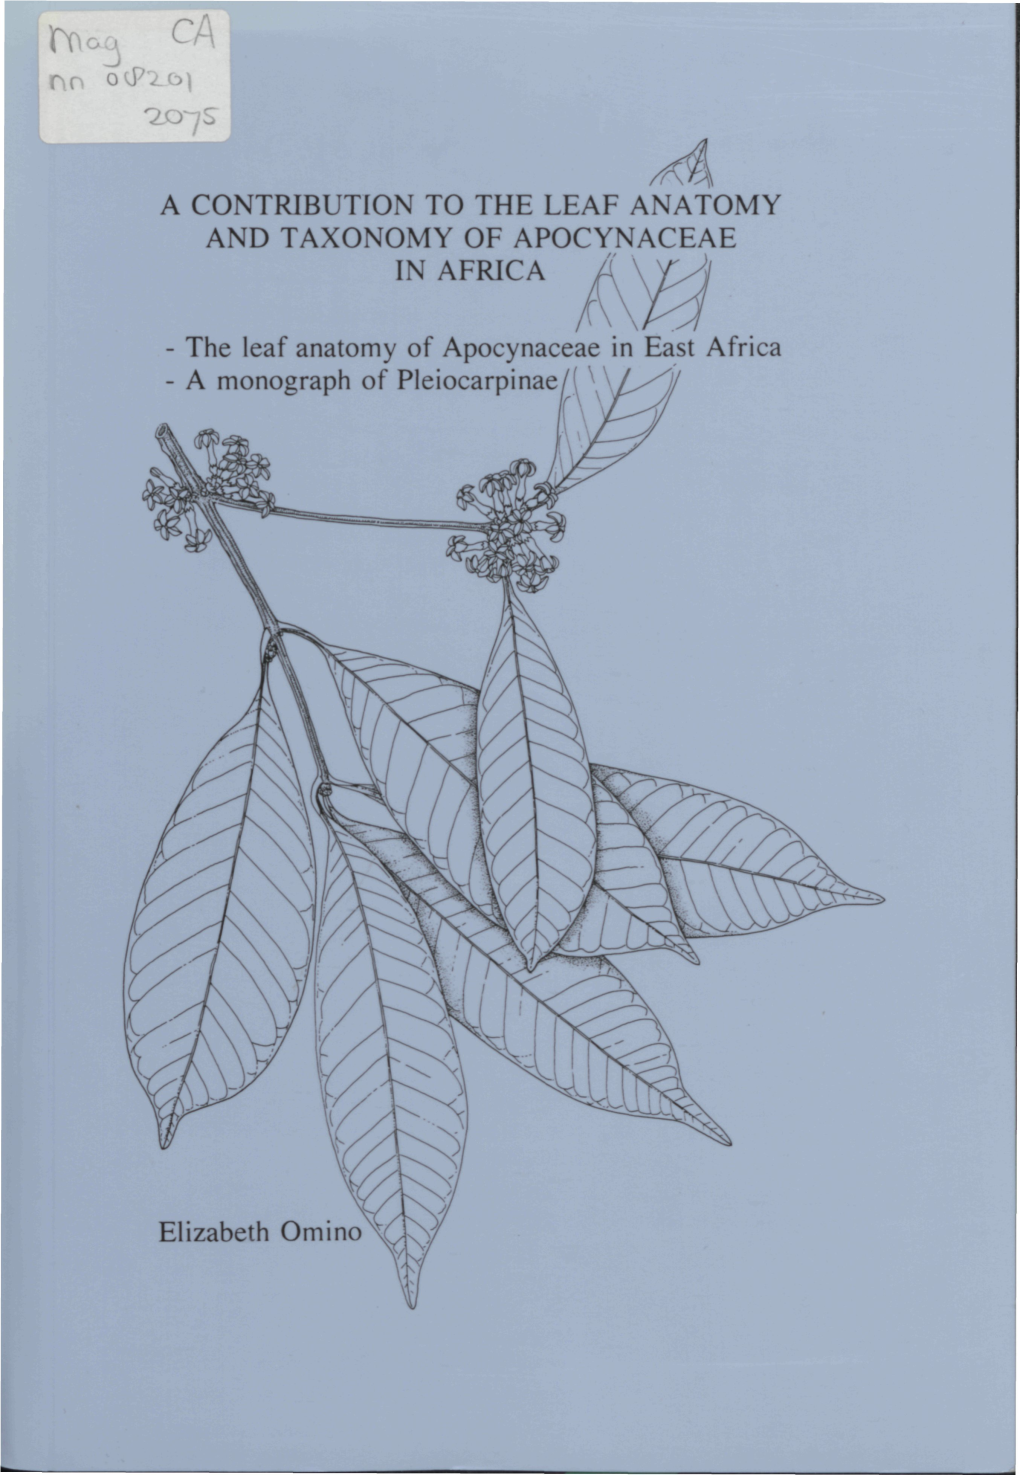 The Leaf Anatomy of Apocynaceae in East Africa - a Monograph of Pleiocarpinae